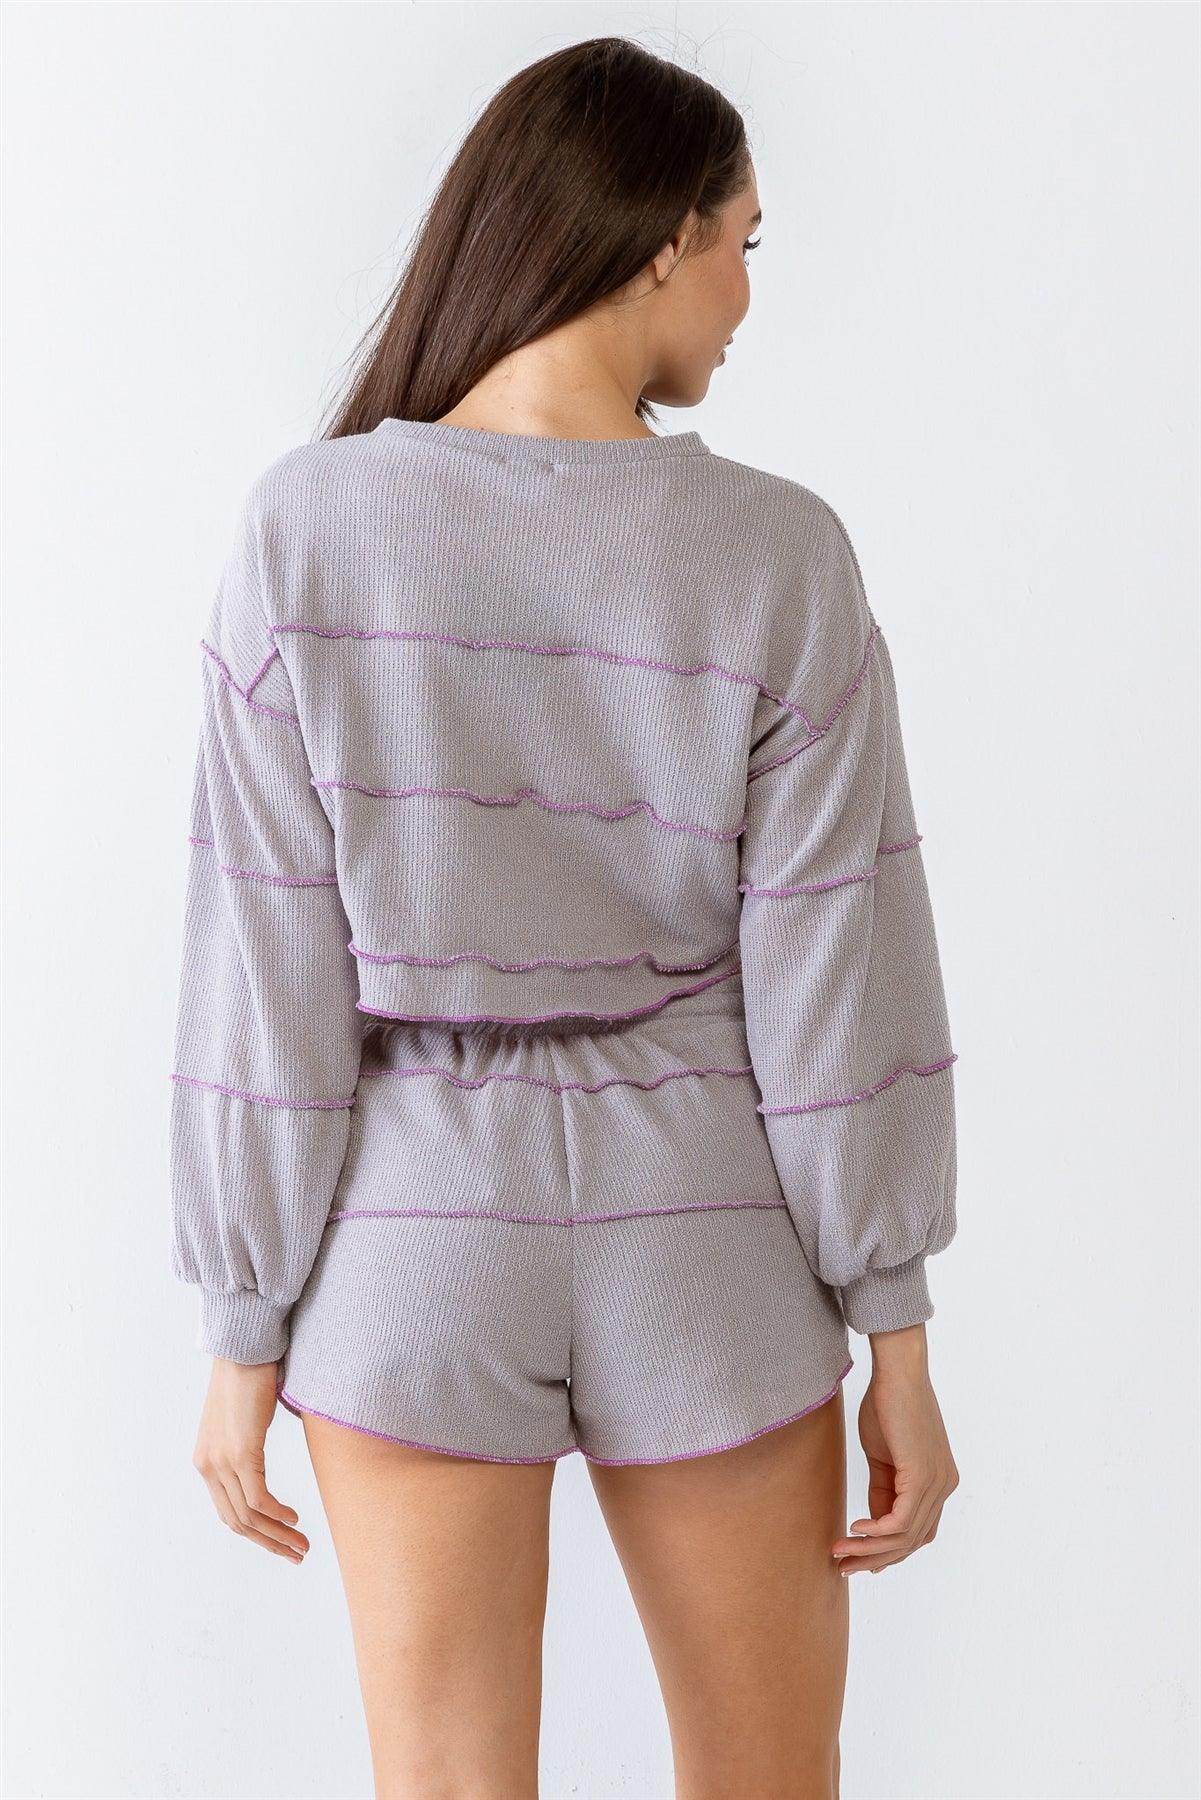 Lavender Knit Inside-Out Detail Crop Top & High Waist Shorts Set /1-2-2-1